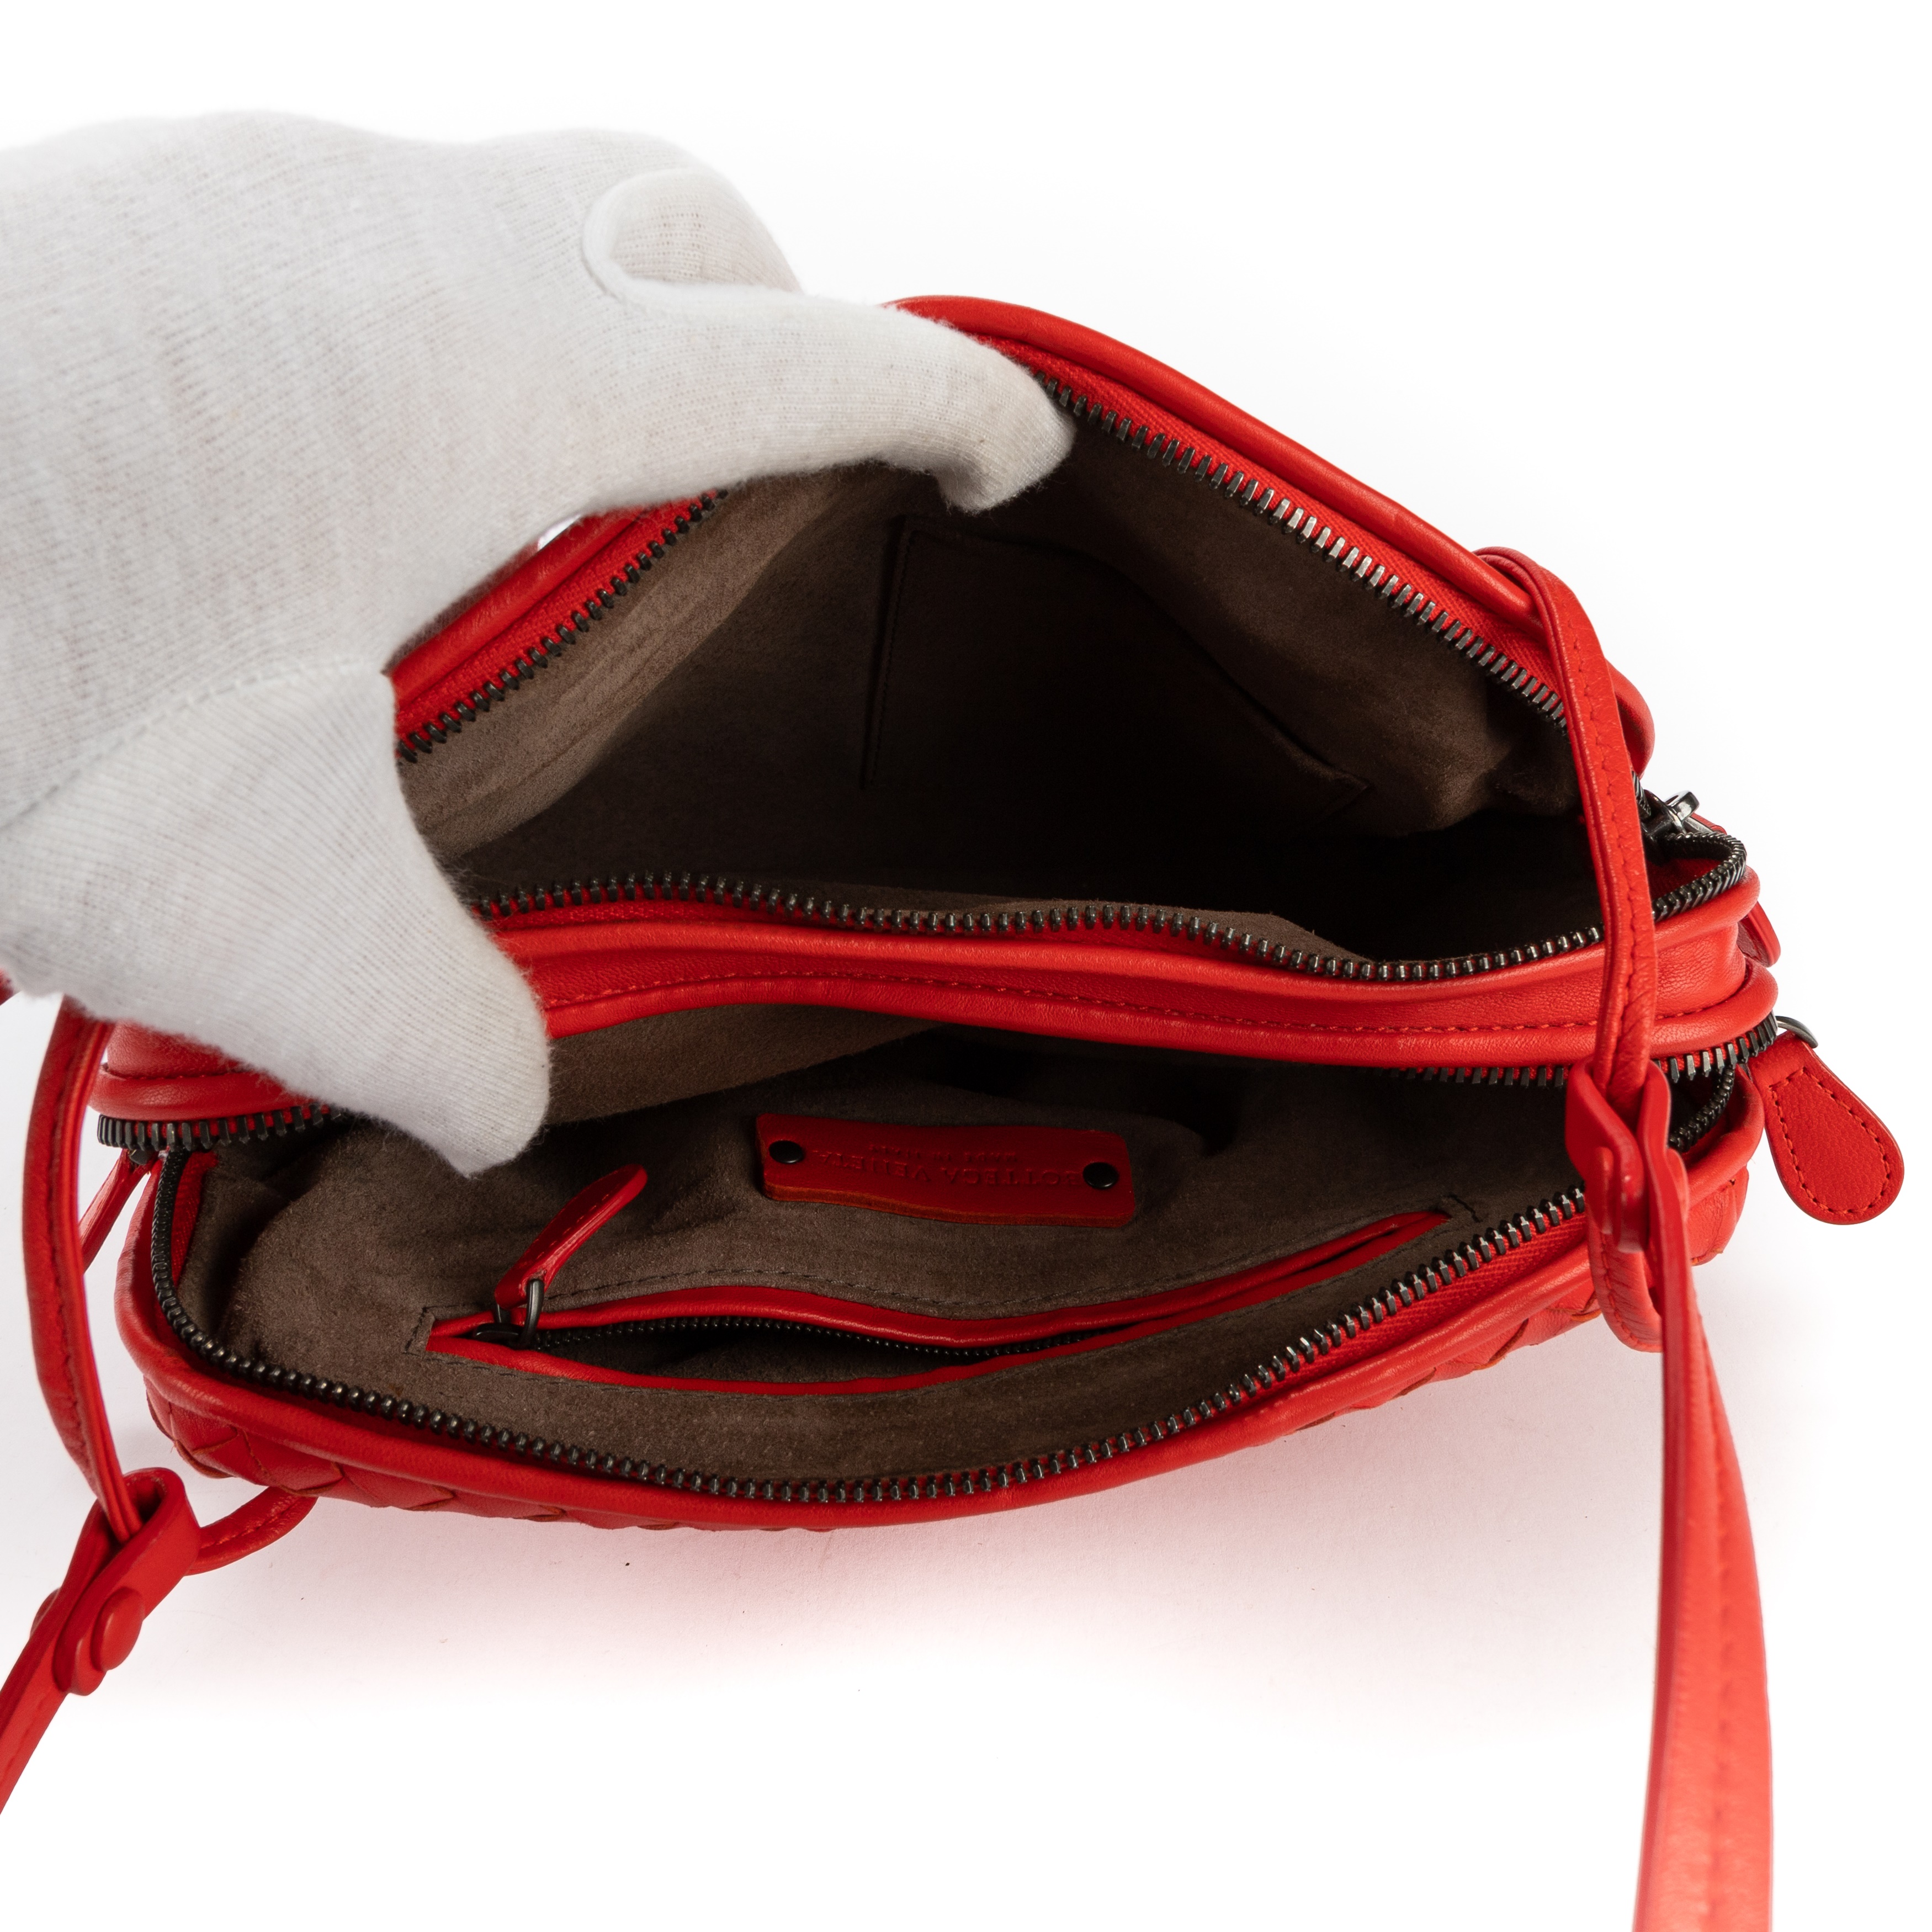 Sold at Auction: Bottega Veneta Red Intrecciato Double Zip Nodini Crossbody  Bag